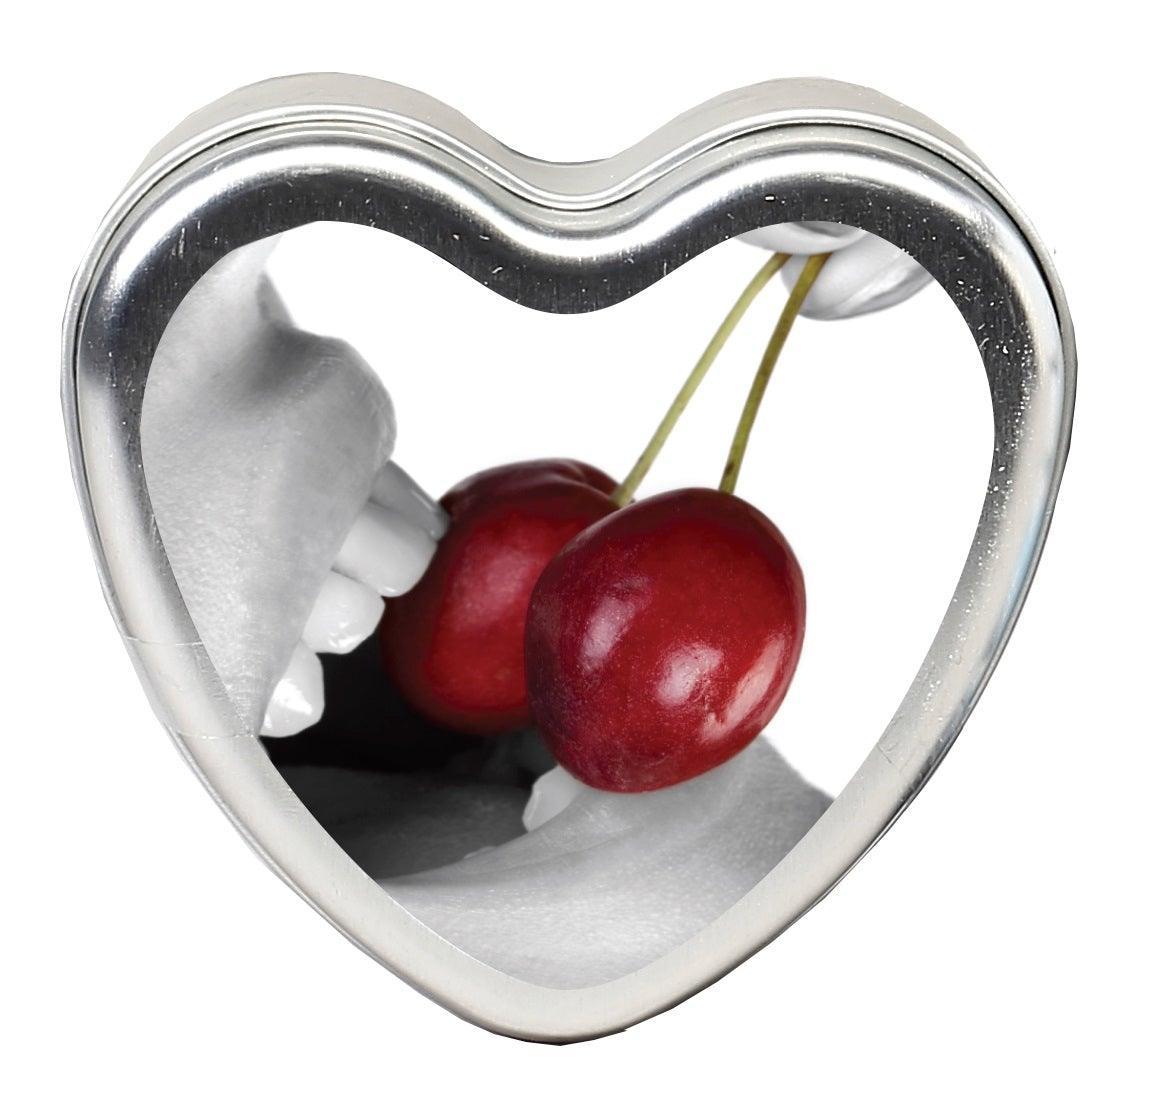 Edible Heart Candle - Cherry - 4 Oz. - My Sex Toy Hub